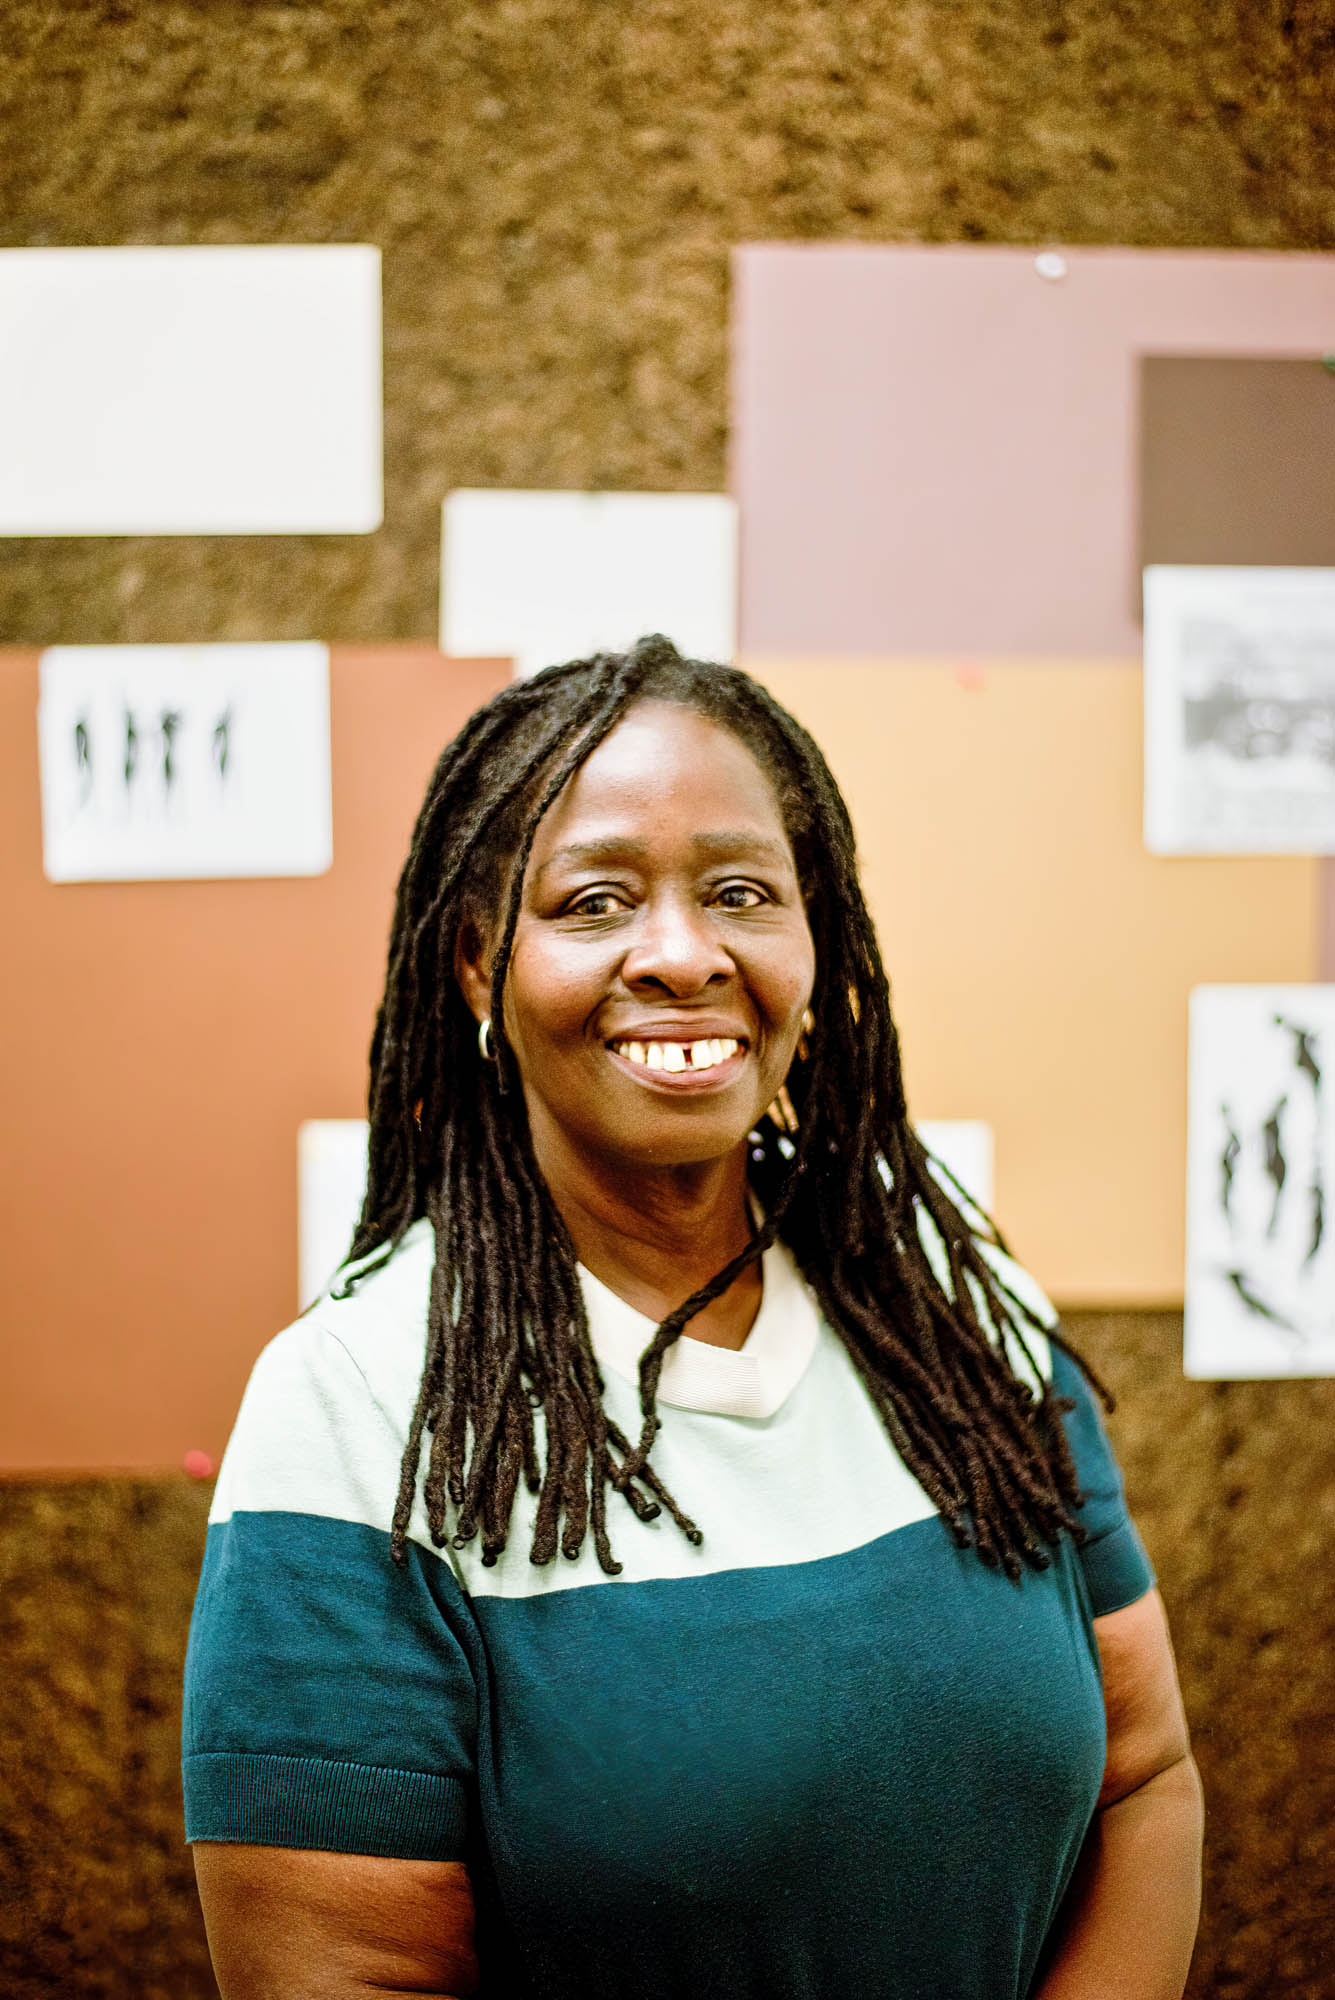 Das Zeitz-MOCAA-Museum: „Das wichtigste Kunstprojekt in Afrika“